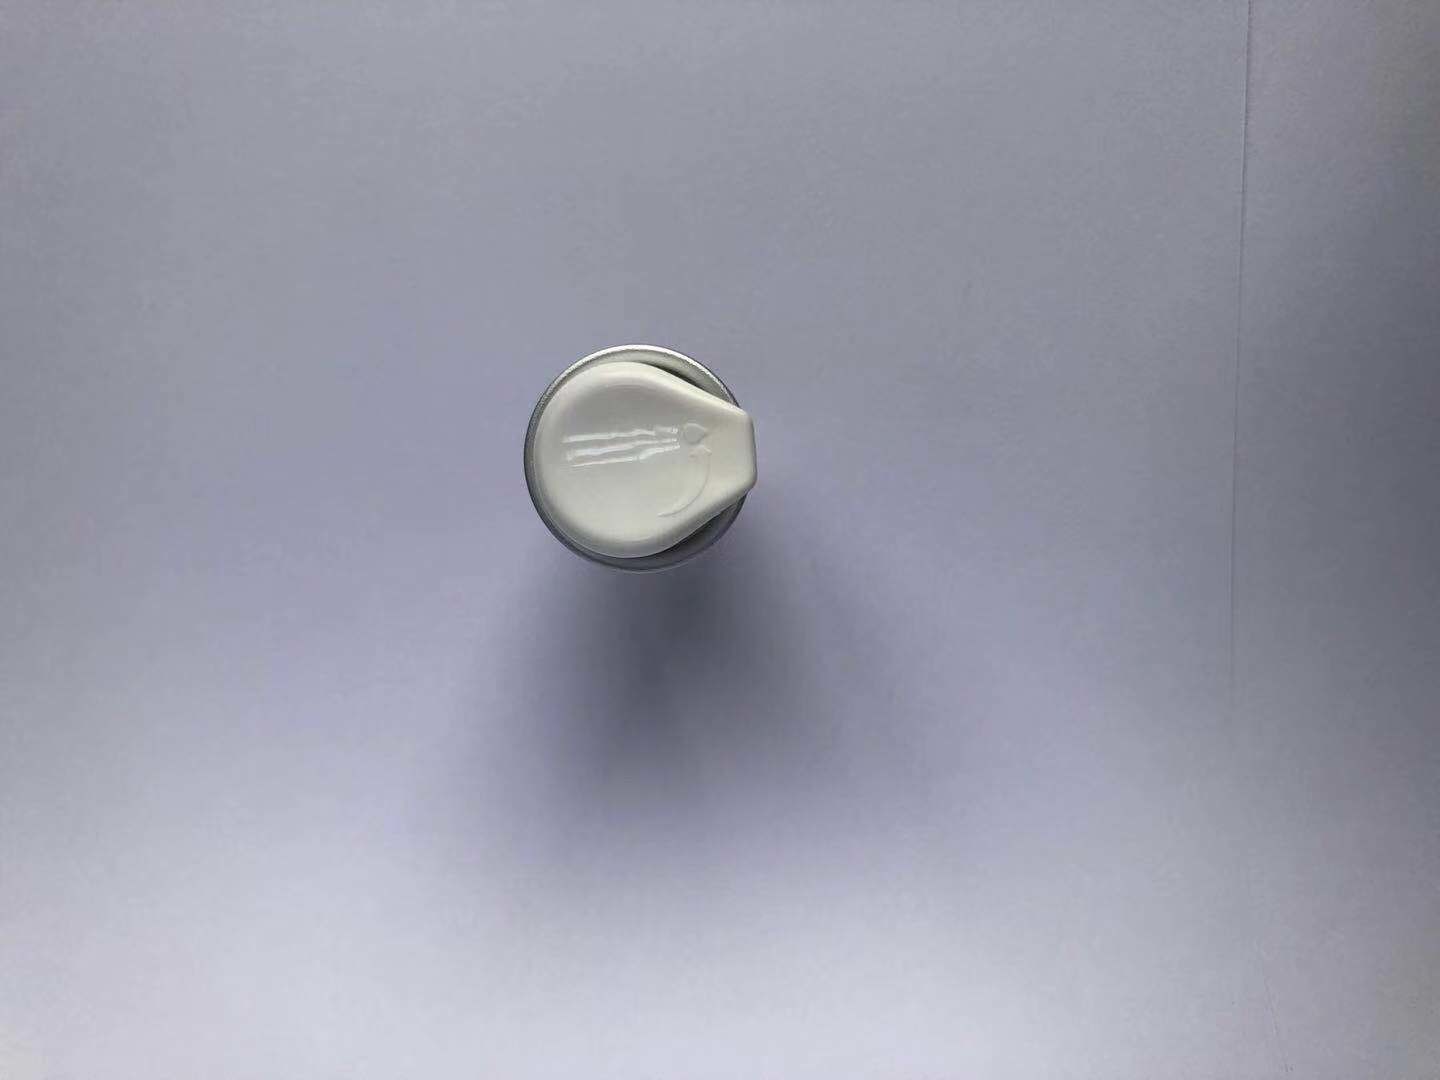 Silver Closure Upscale Cream Pump Dispenser For Personal Care Products